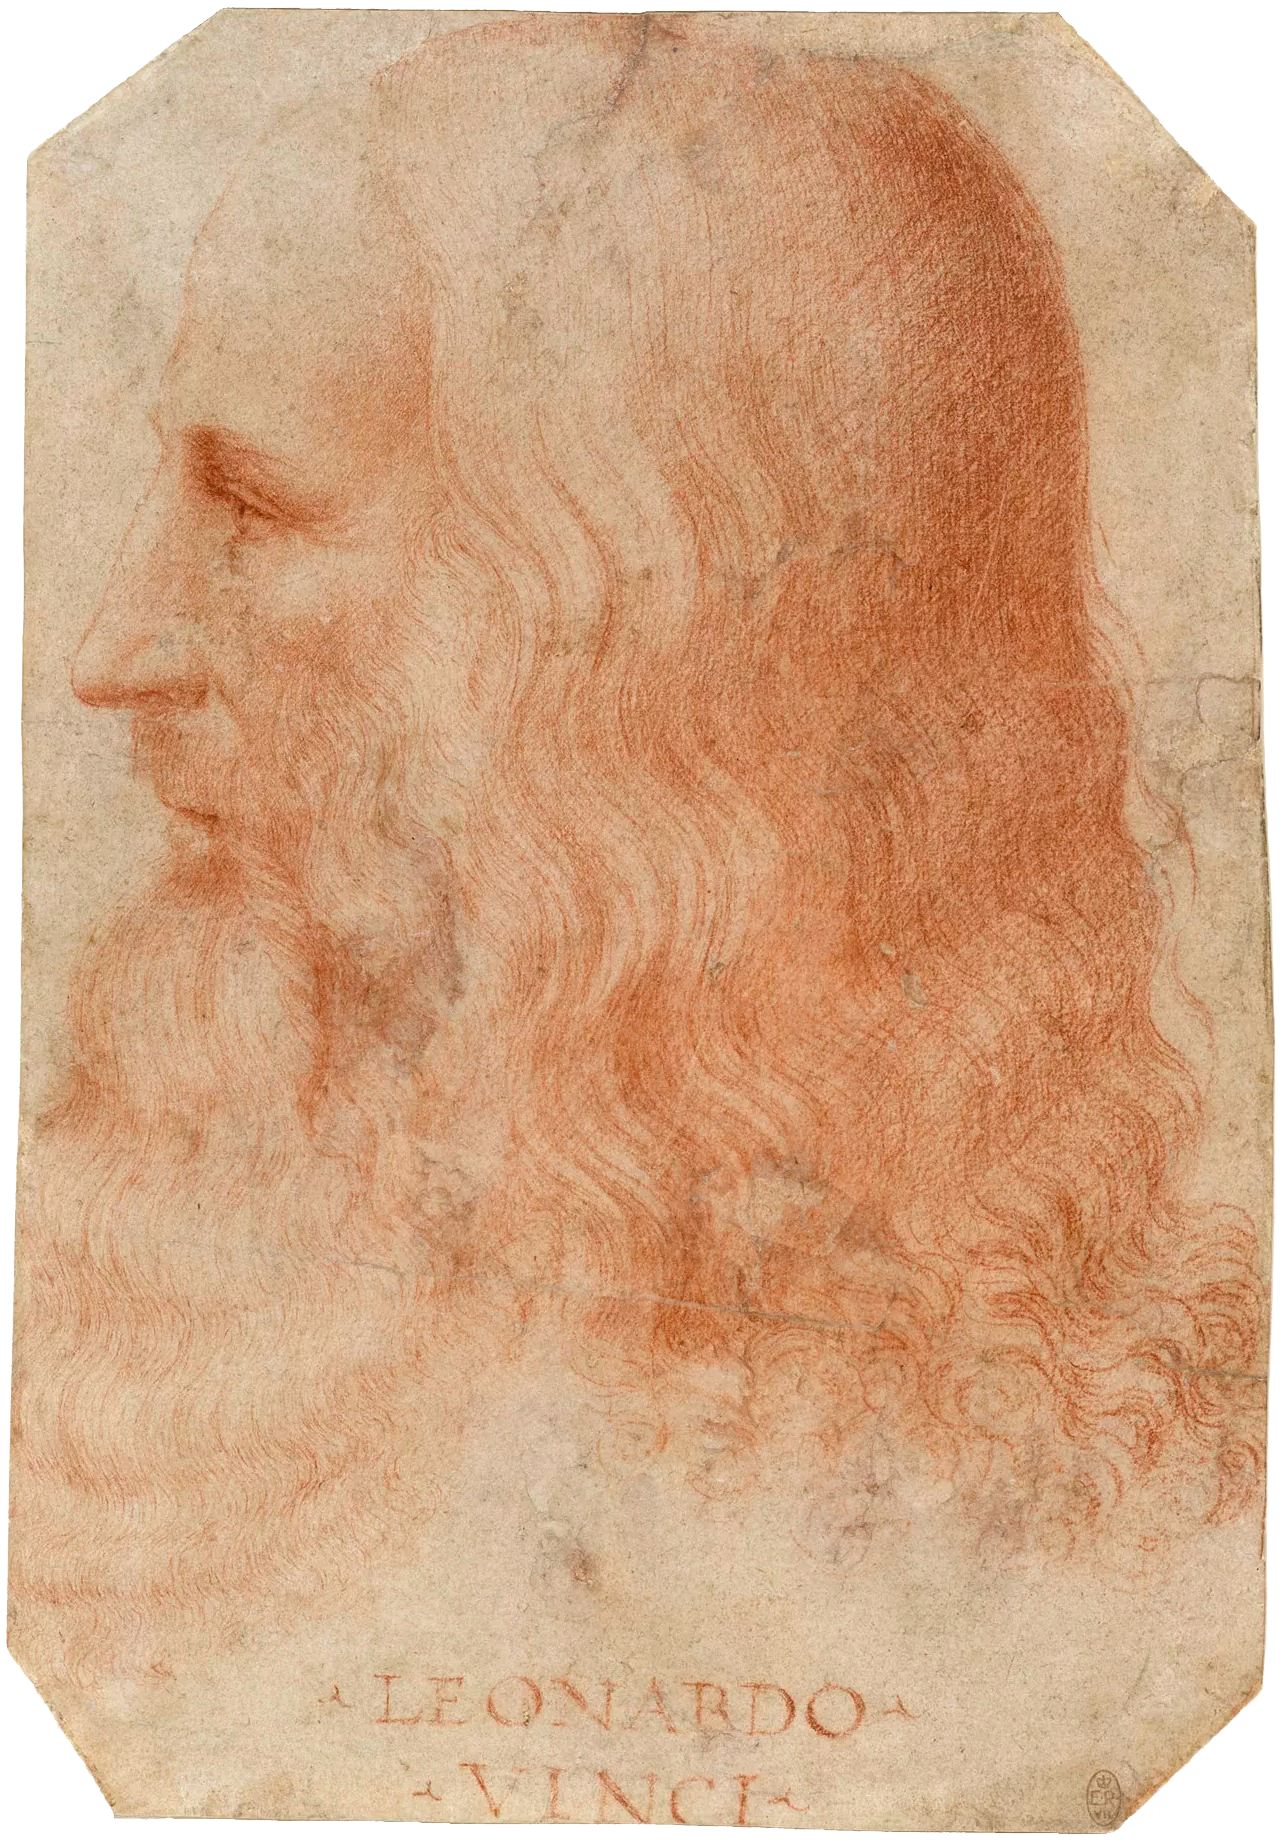 The Life and Times of Leonardo Da Vinci